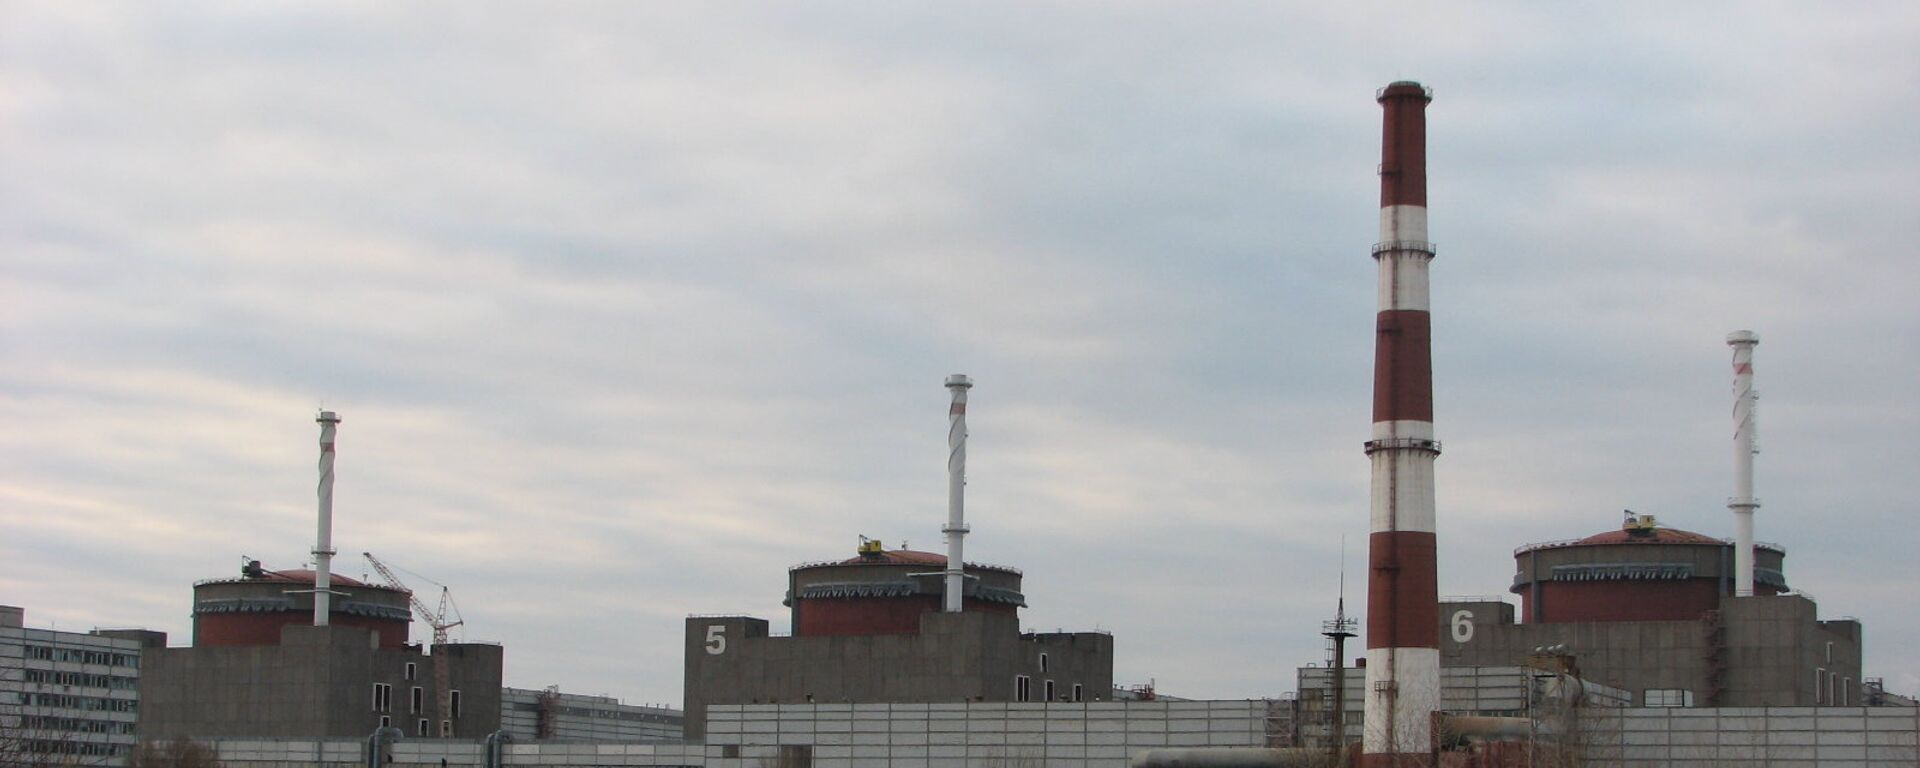 Ukraine's Zaporozhye Nuclear Power Station (file photo) - Sputnik International, 1920, 11.03.2022